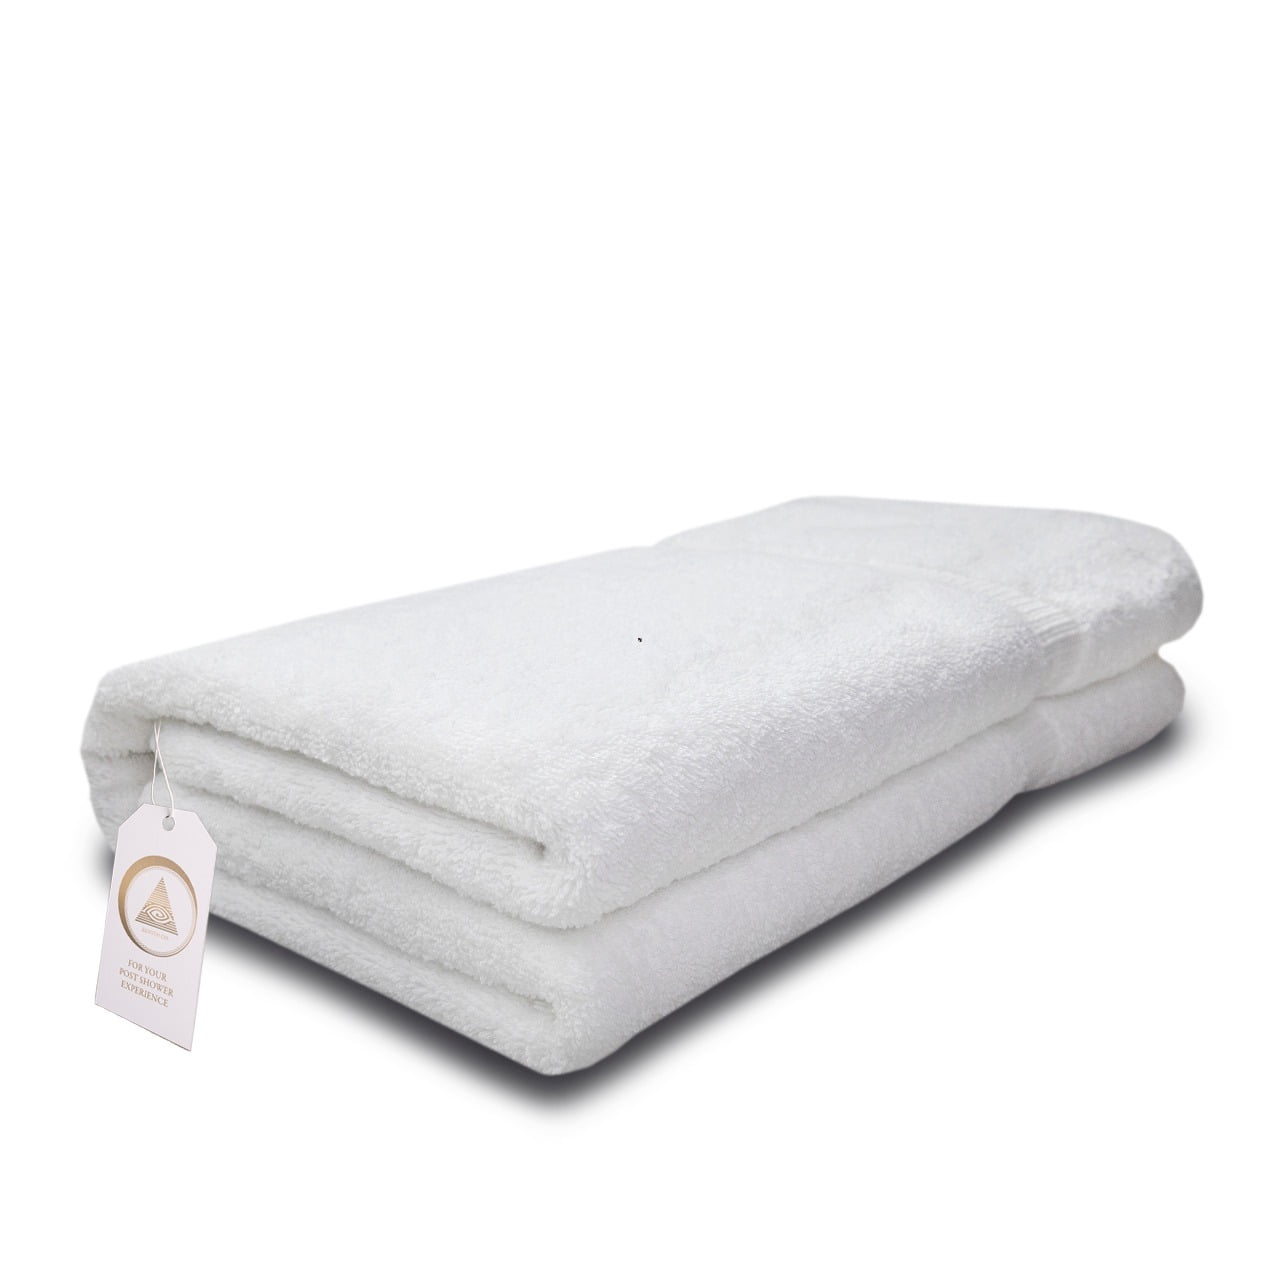 Brand – Pinzon Heavyweight Luxury Cotton Large Towel Bath Sheet - 70  x 40 Inch, Ivory